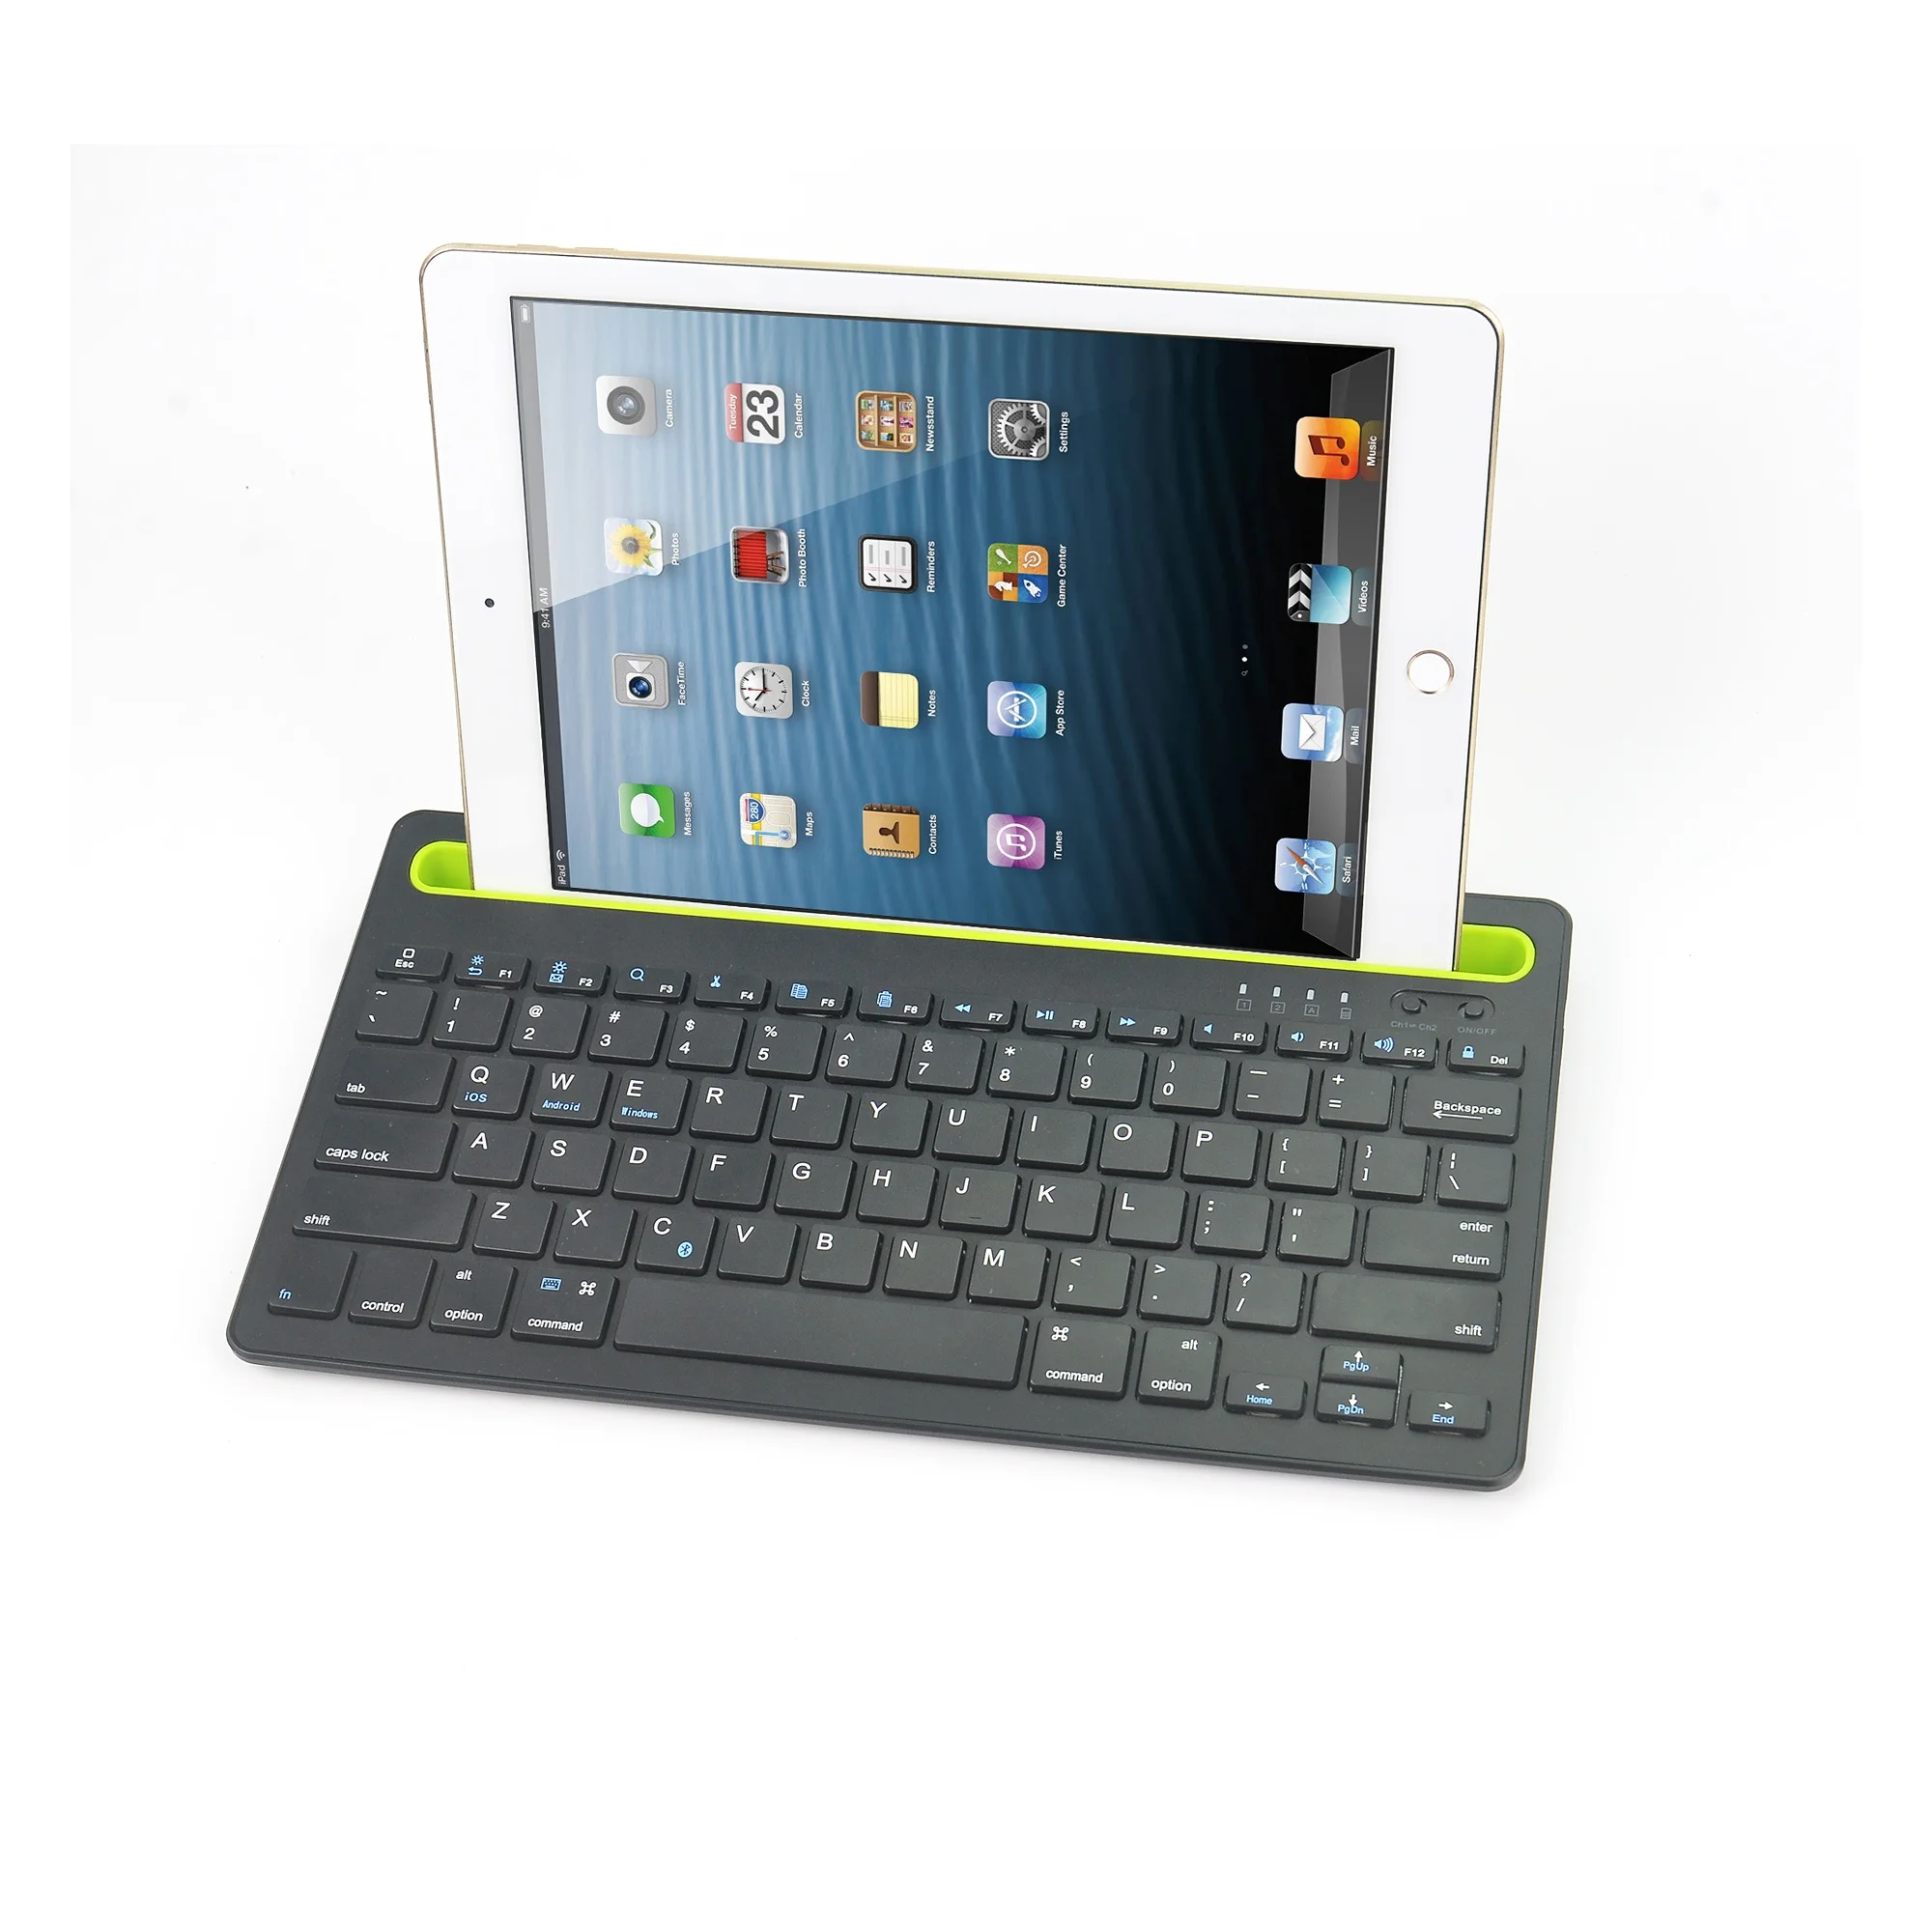 

Dual Channel wireless keyboard Bluetooth Multi-Device Keyboard for Computers/Tablets/Smartphones, Black